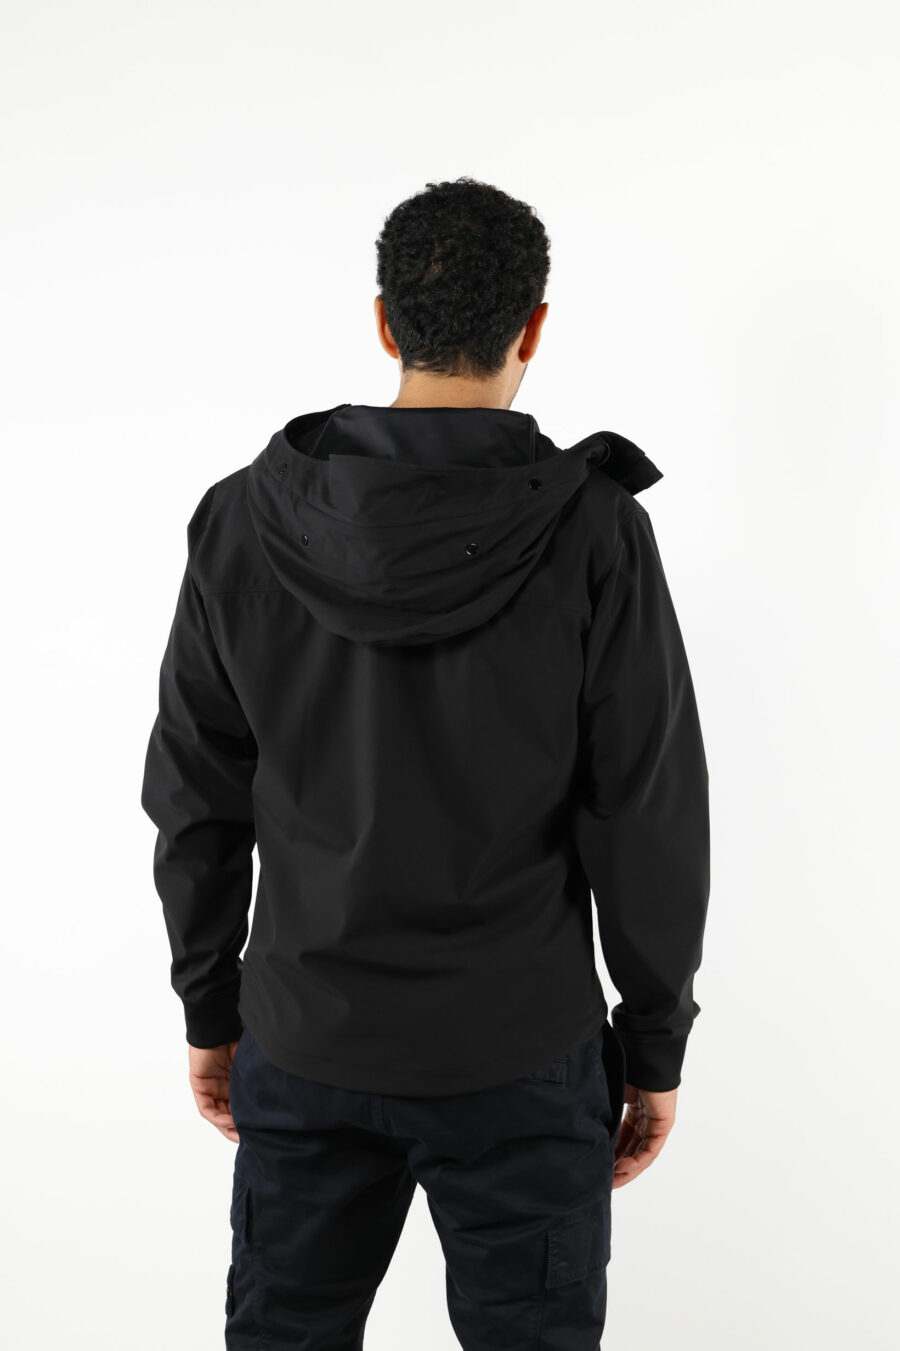 Black jacket with goggle logo and hood - 111426